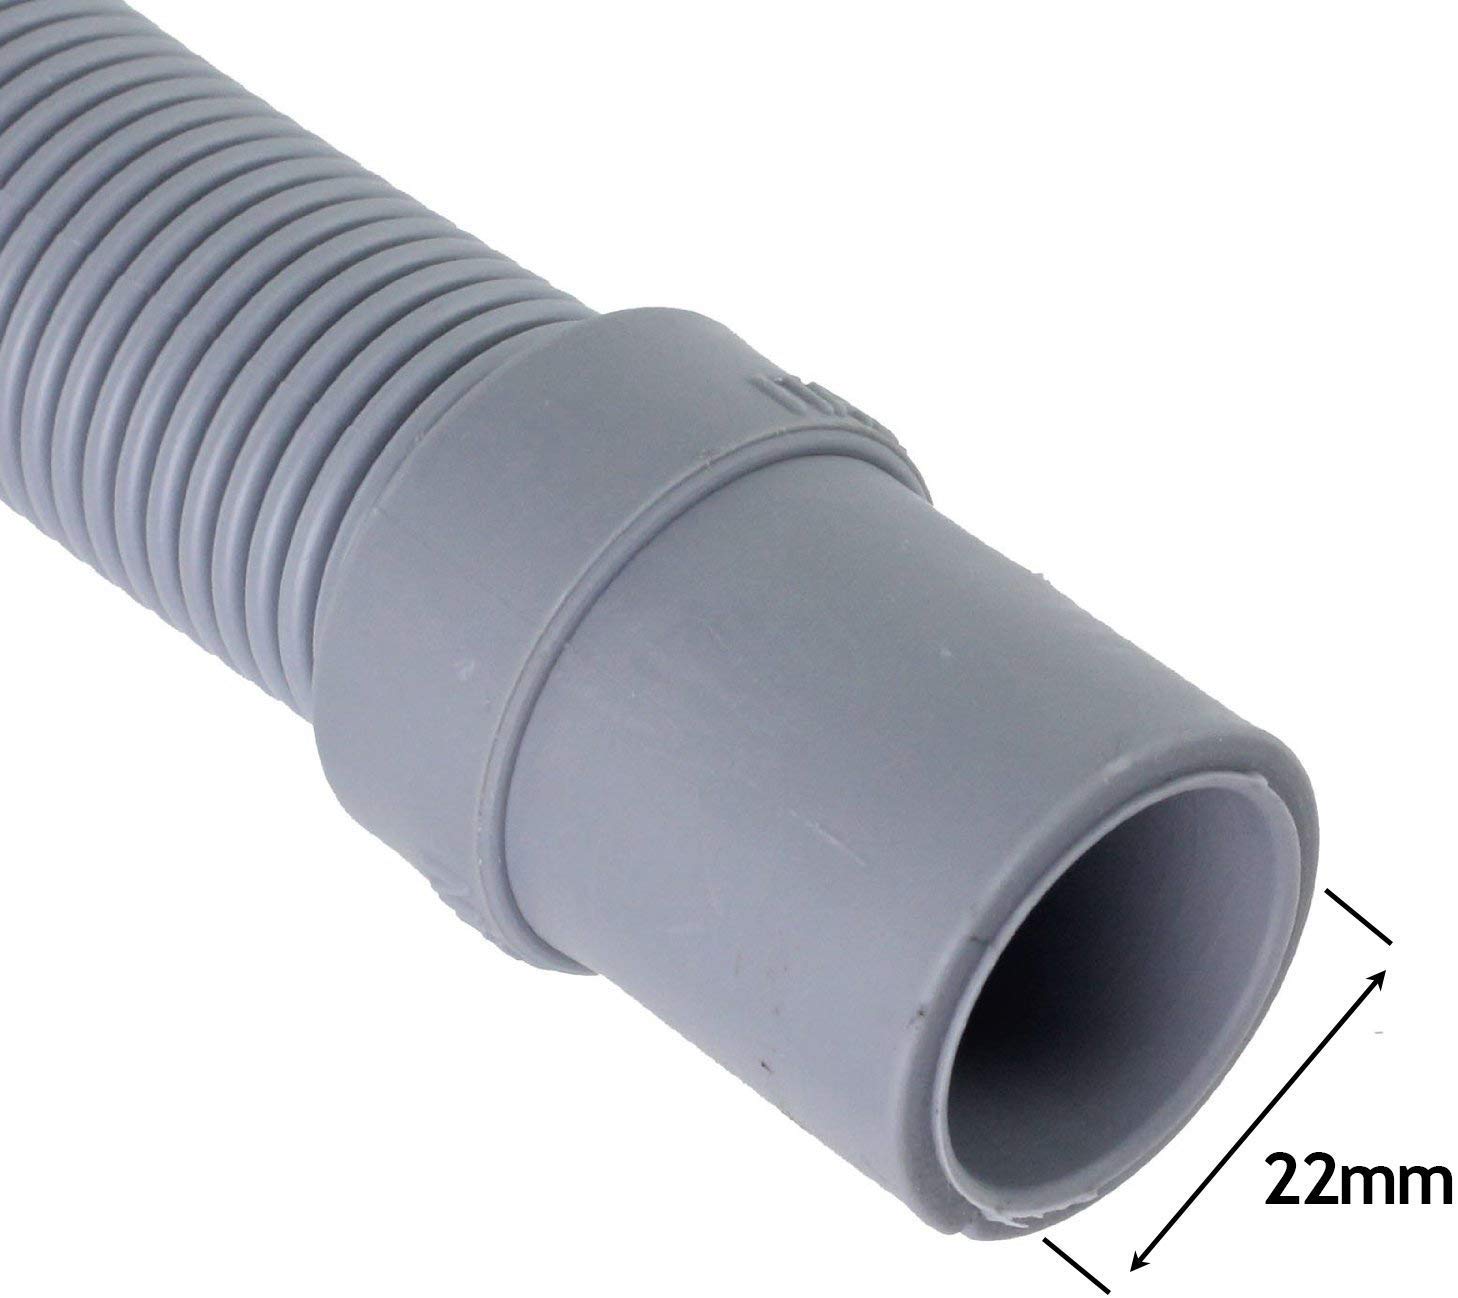 Drain Hose Extension Pipe Kit for Bosch Washing Machine Dishwasher (2.5m, 19mm / 22mm)